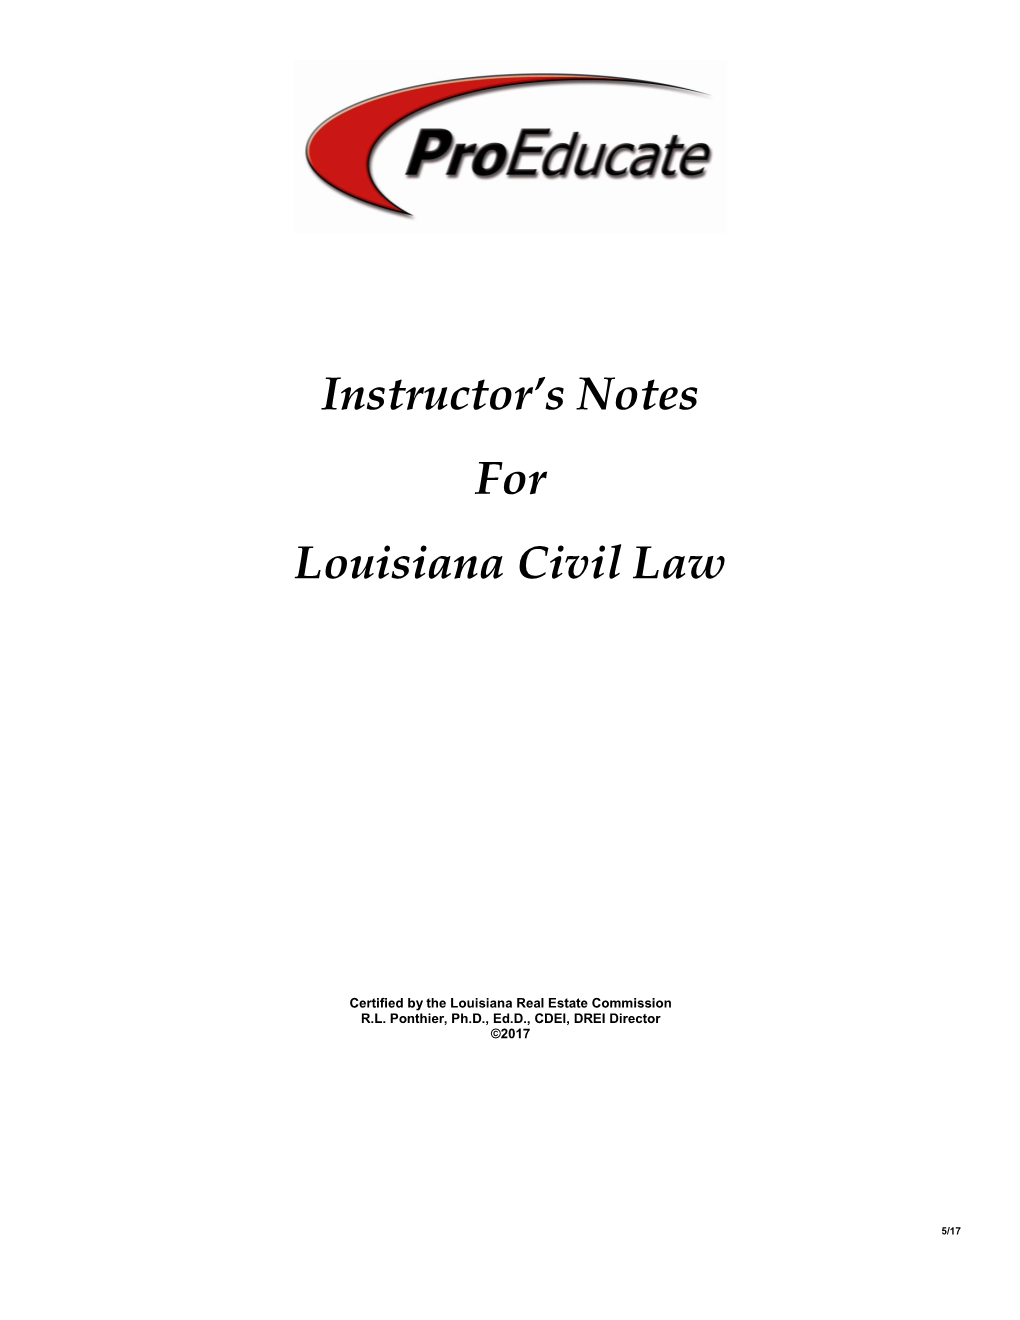 Instructor's Notes for Louisiana Civil